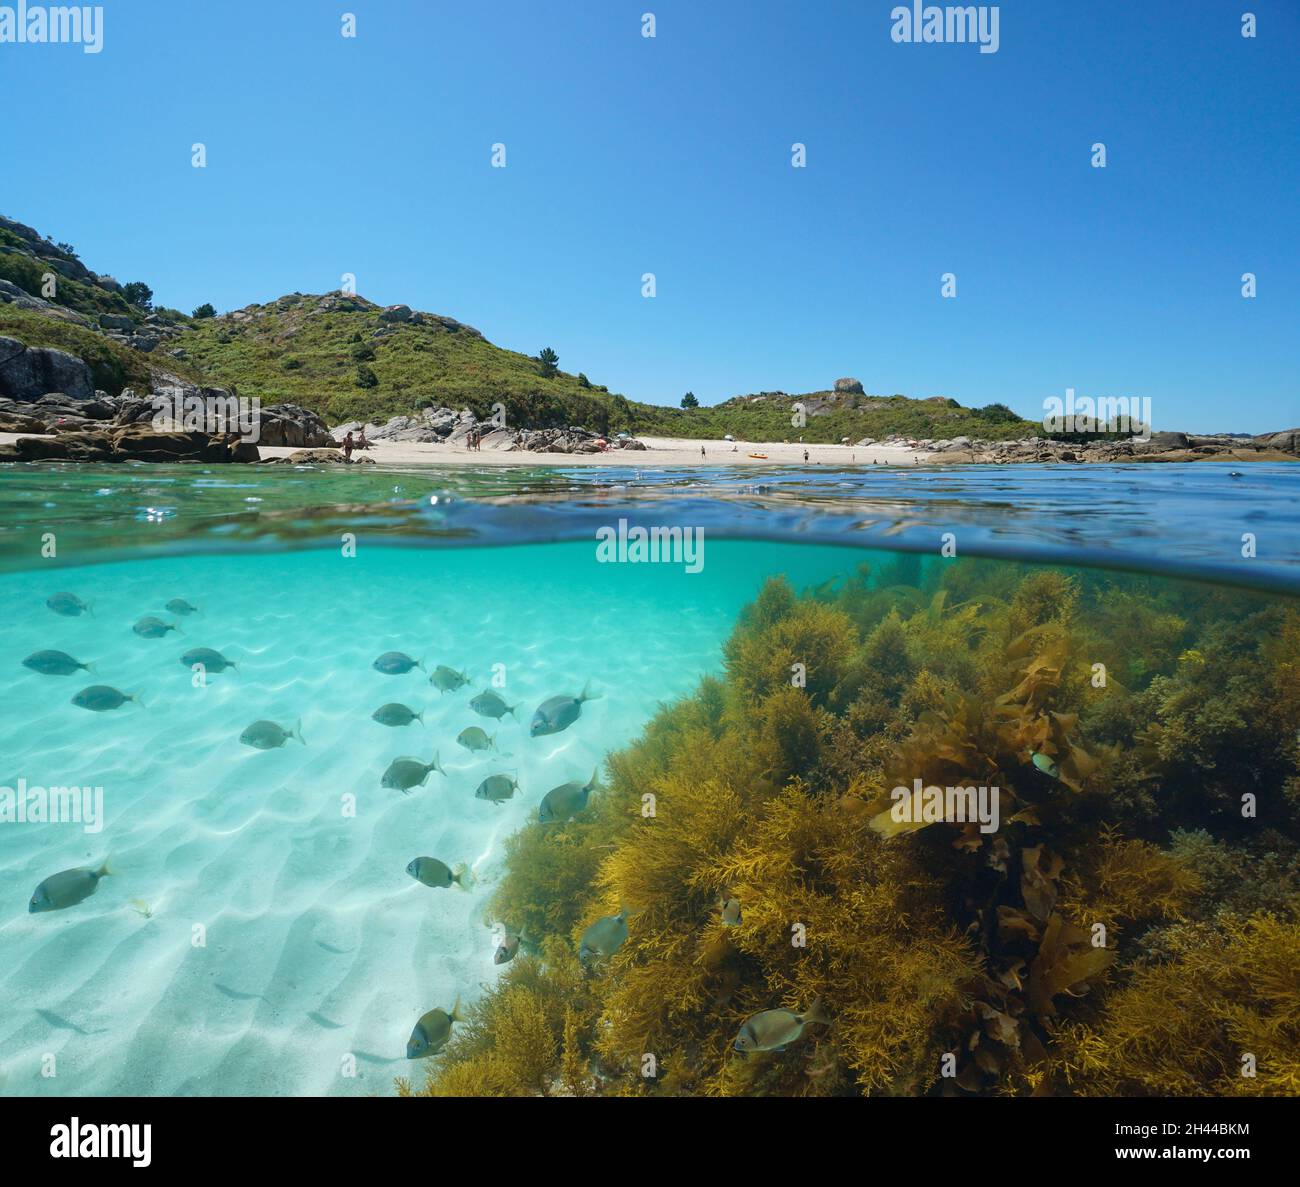 Beach coastline and fish with algae underwater ocean, Spain, Galicia, split view over under water surface, Eastern Atlantic, Pontevedra province Stock Photo